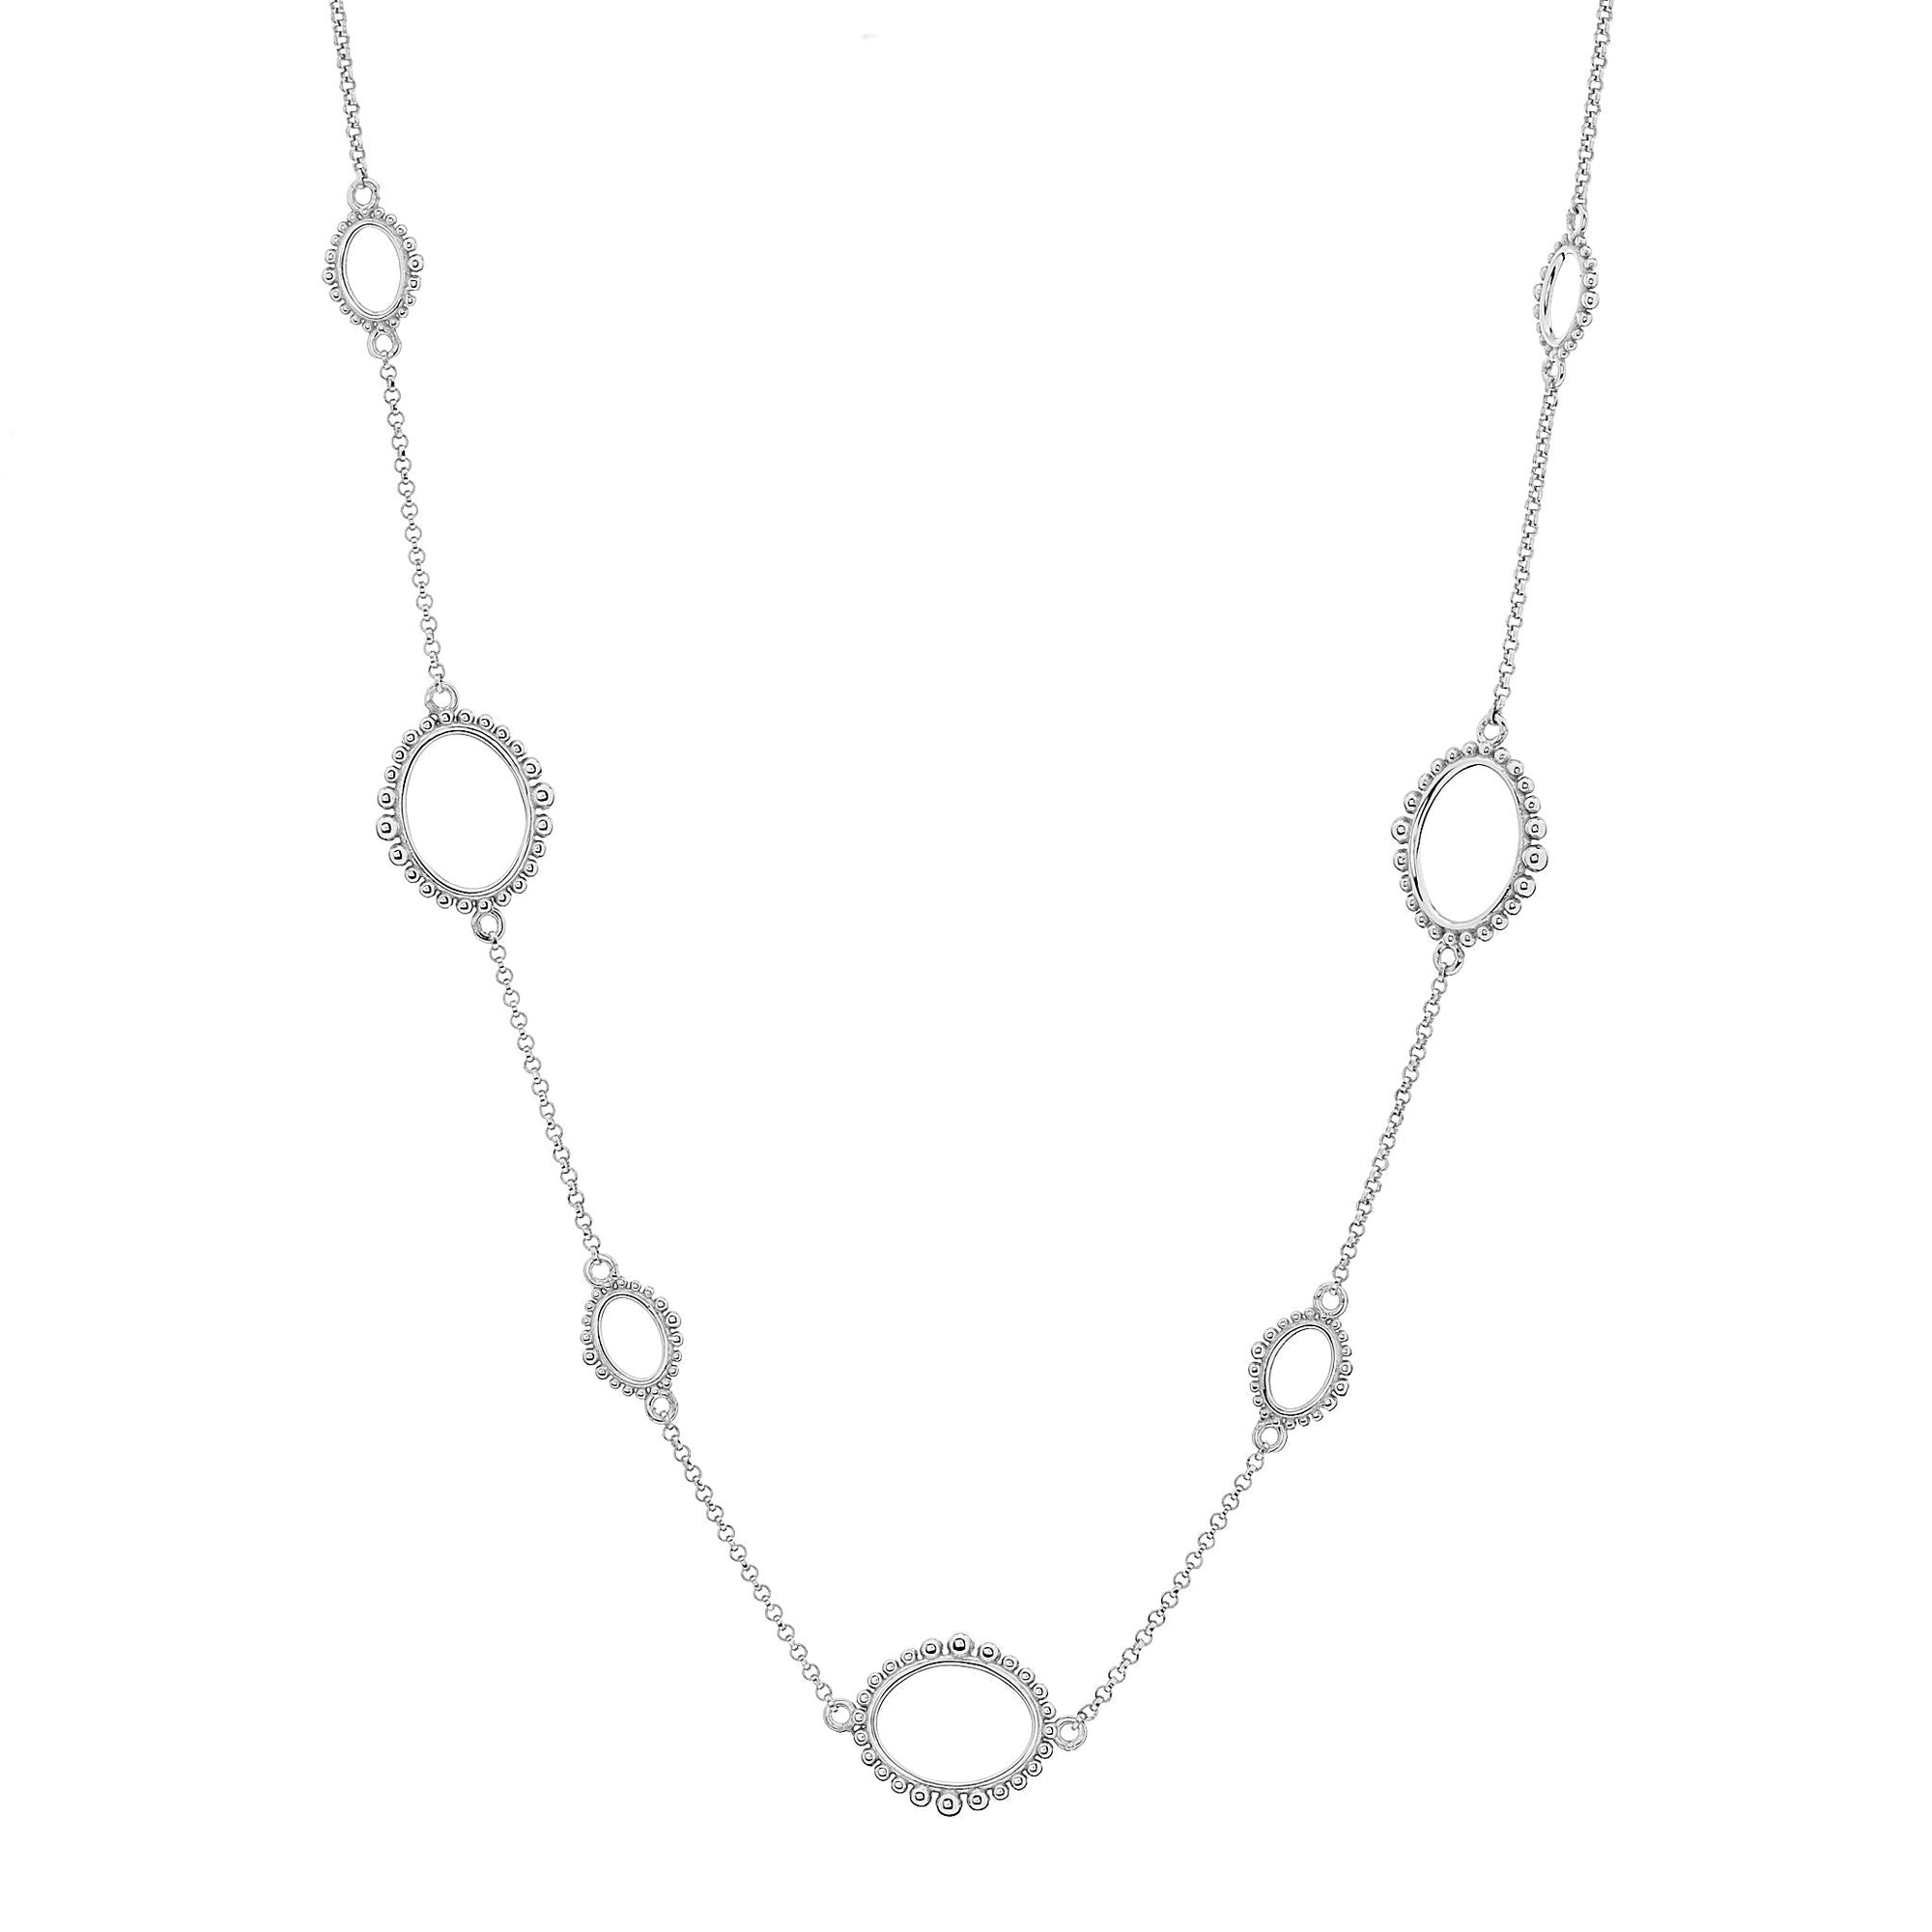 Sybella Necklaces Fiona Short Chain Necklace